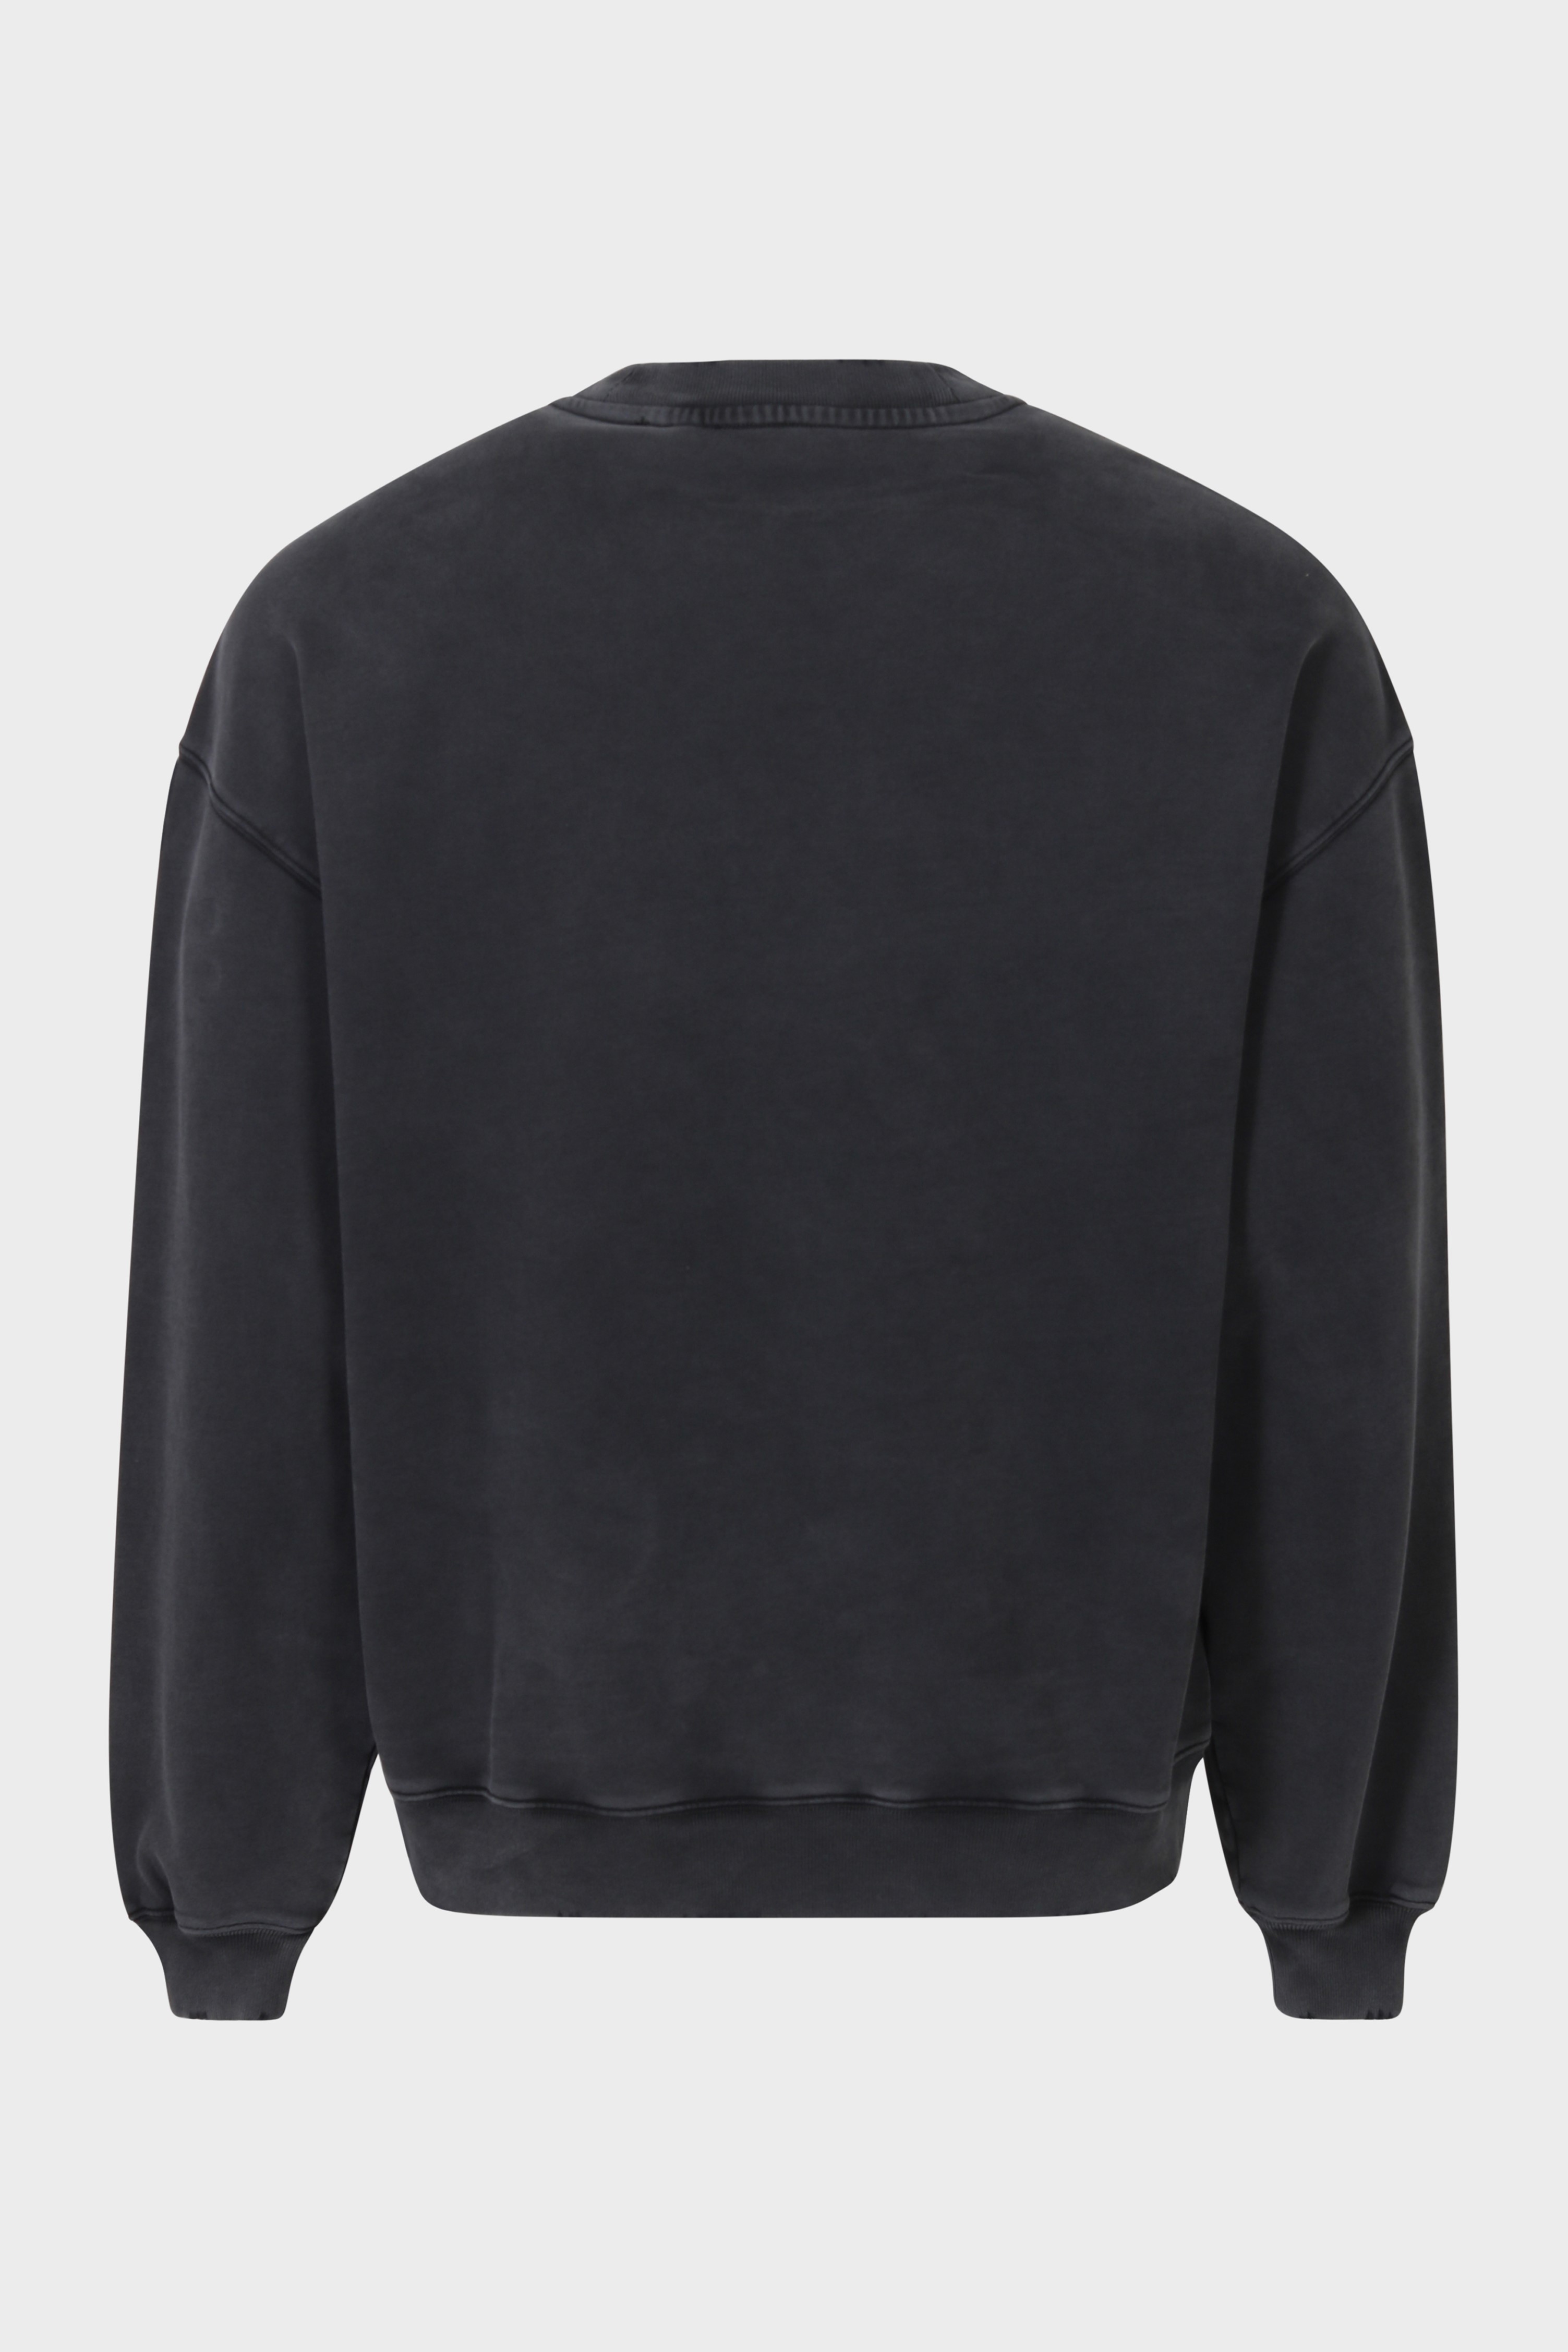 AXEL ARIGATO Wes Distrezzed Sweatshirt in Washed Black M